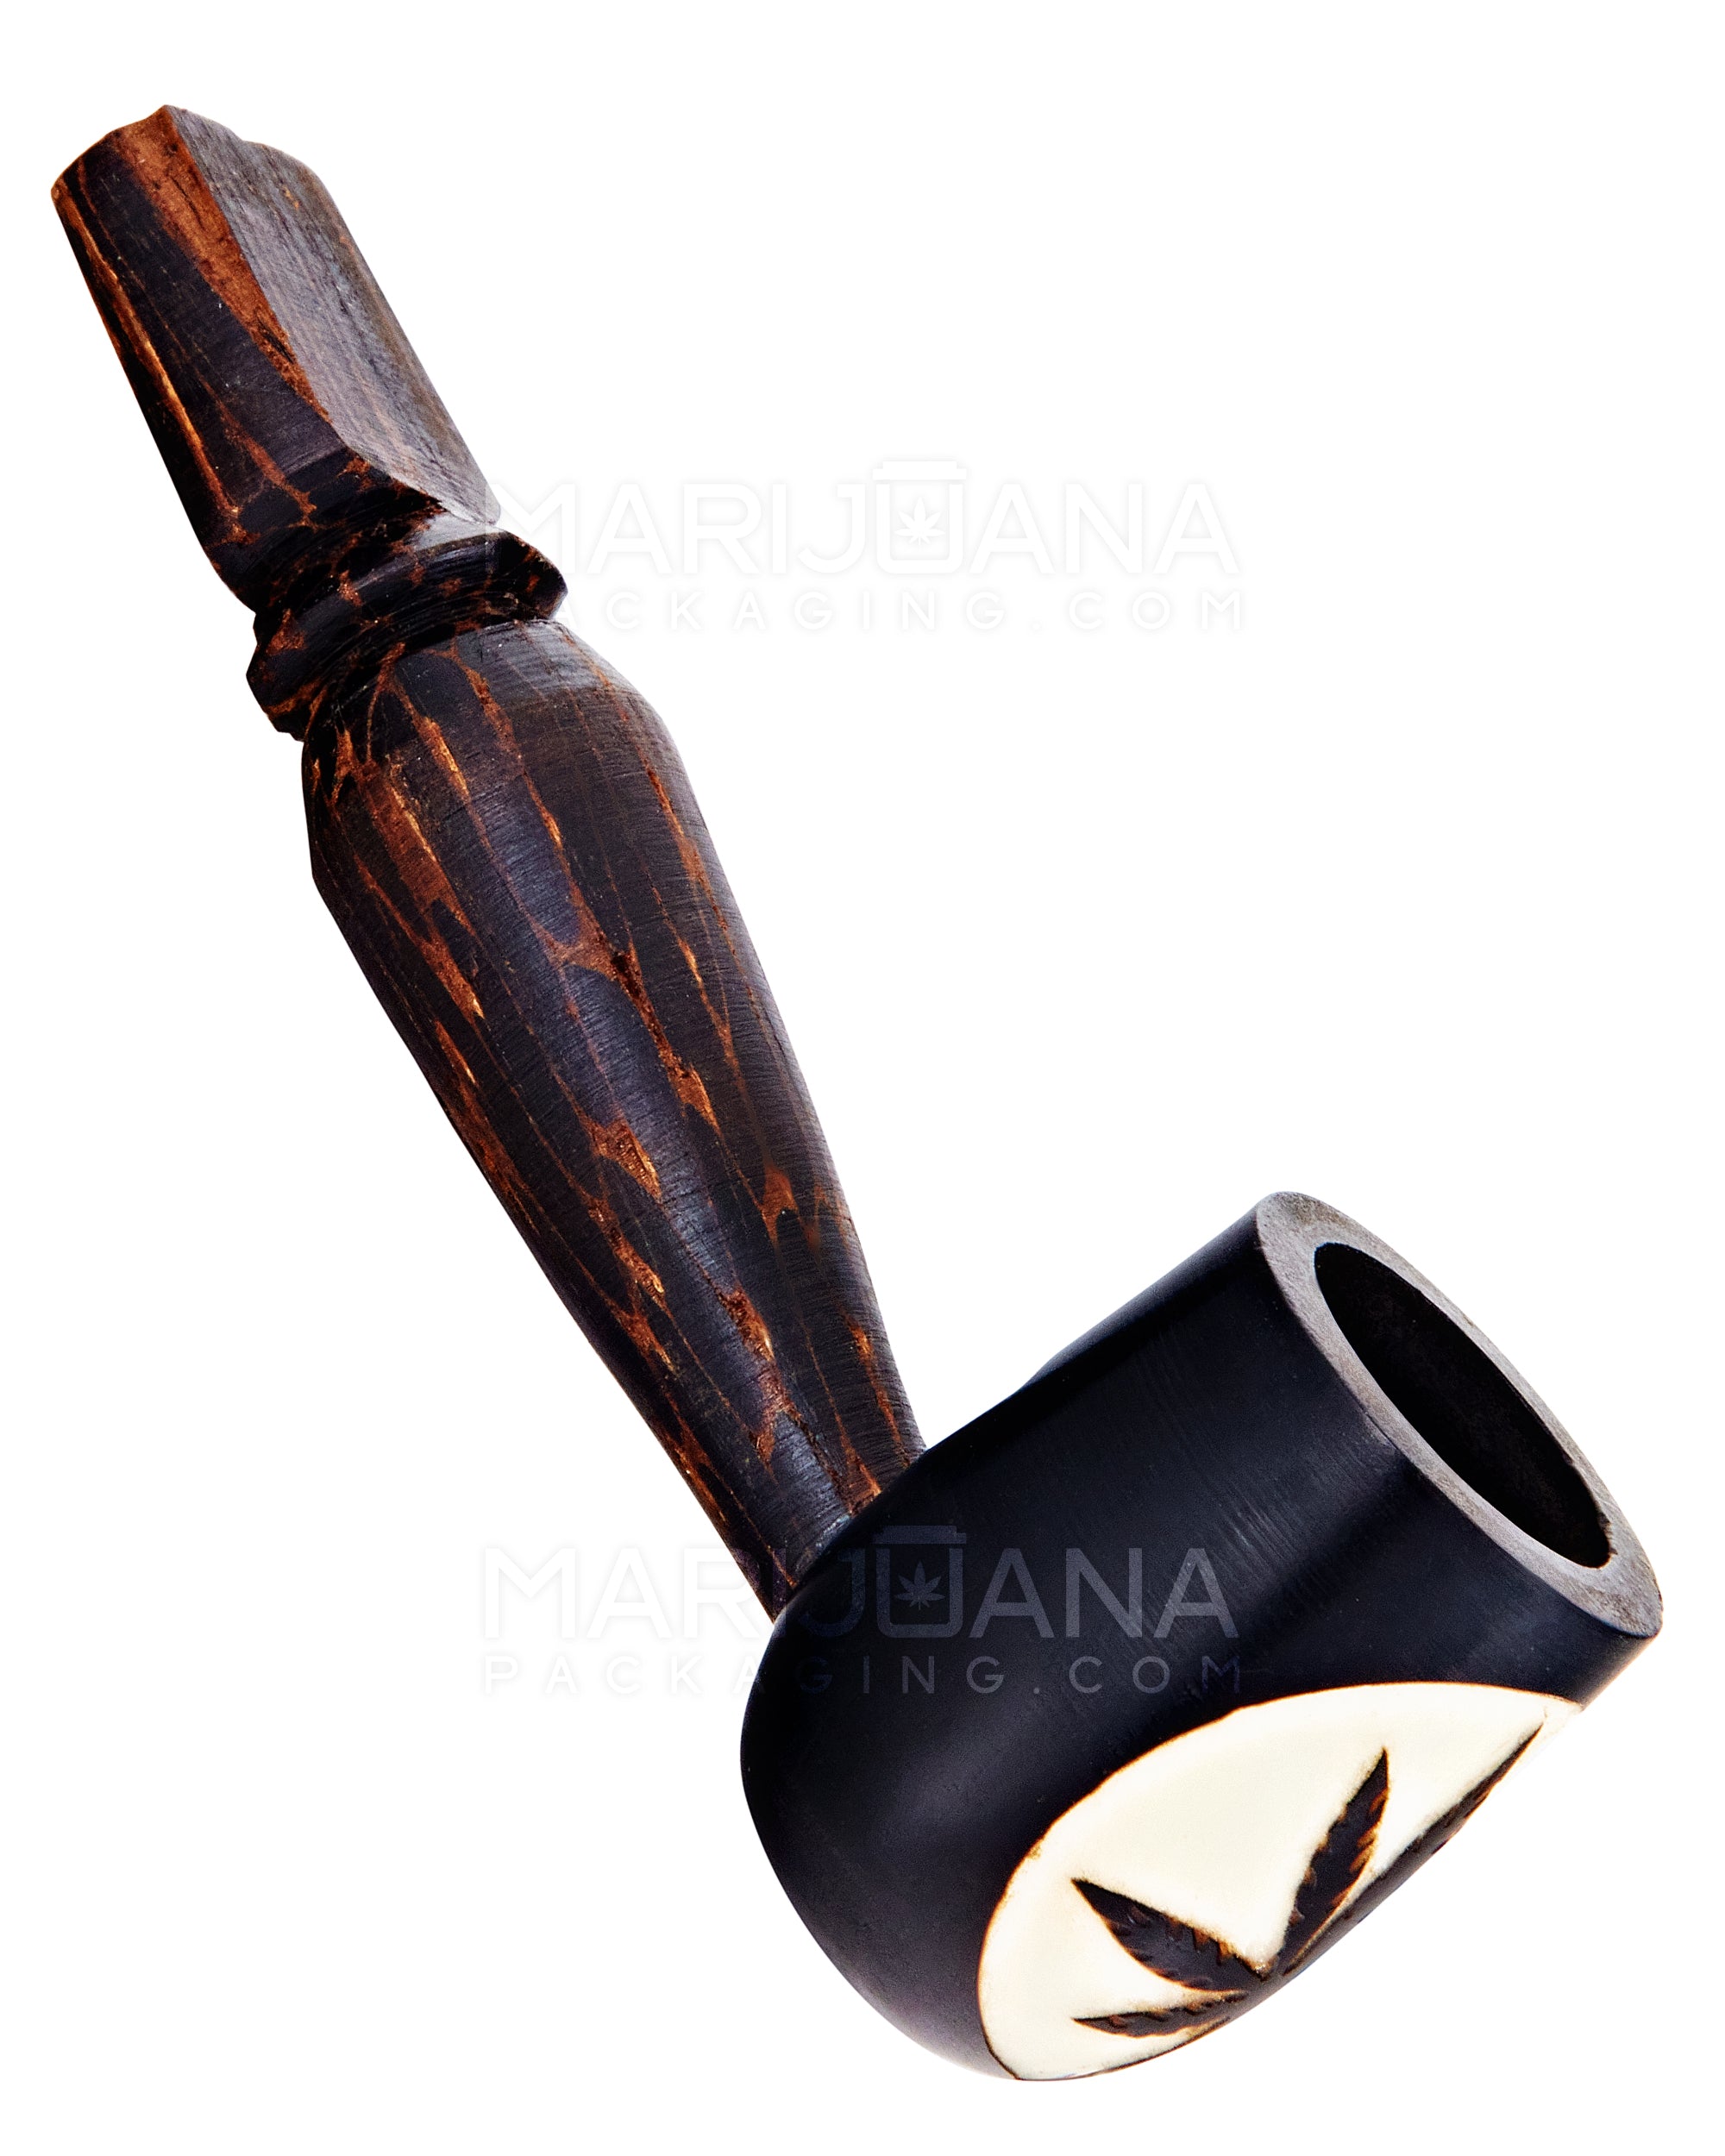 420 Leaf Design Tagua Sherlock Hand Pipe | 3.5in Long - Wood - Brown - 1